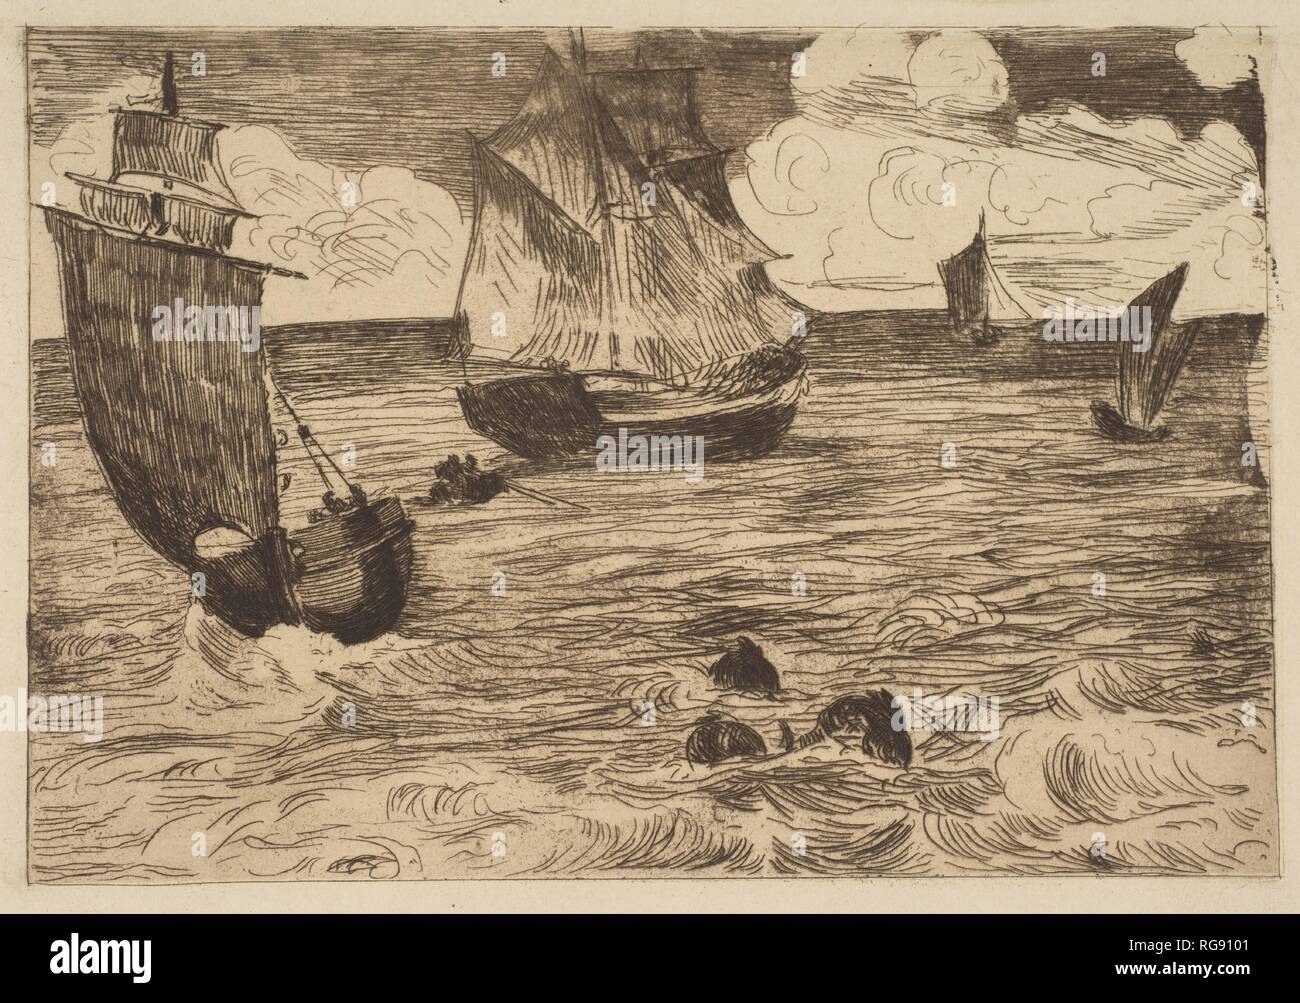 Marine. Artista: Édouard Manet (francese, Parigi Parigi 1832-1883). Dimensioni: piastra: 5 1/2 x 7 7/8a. (14 x 20cm) foglio: 12 1/8 x 13 9/16a. (30,8 x 34.4cm). Data: 1865-66. Museo: Metropolitan Museum of Art di New York, Stati Uniti d'America. Foto Stock